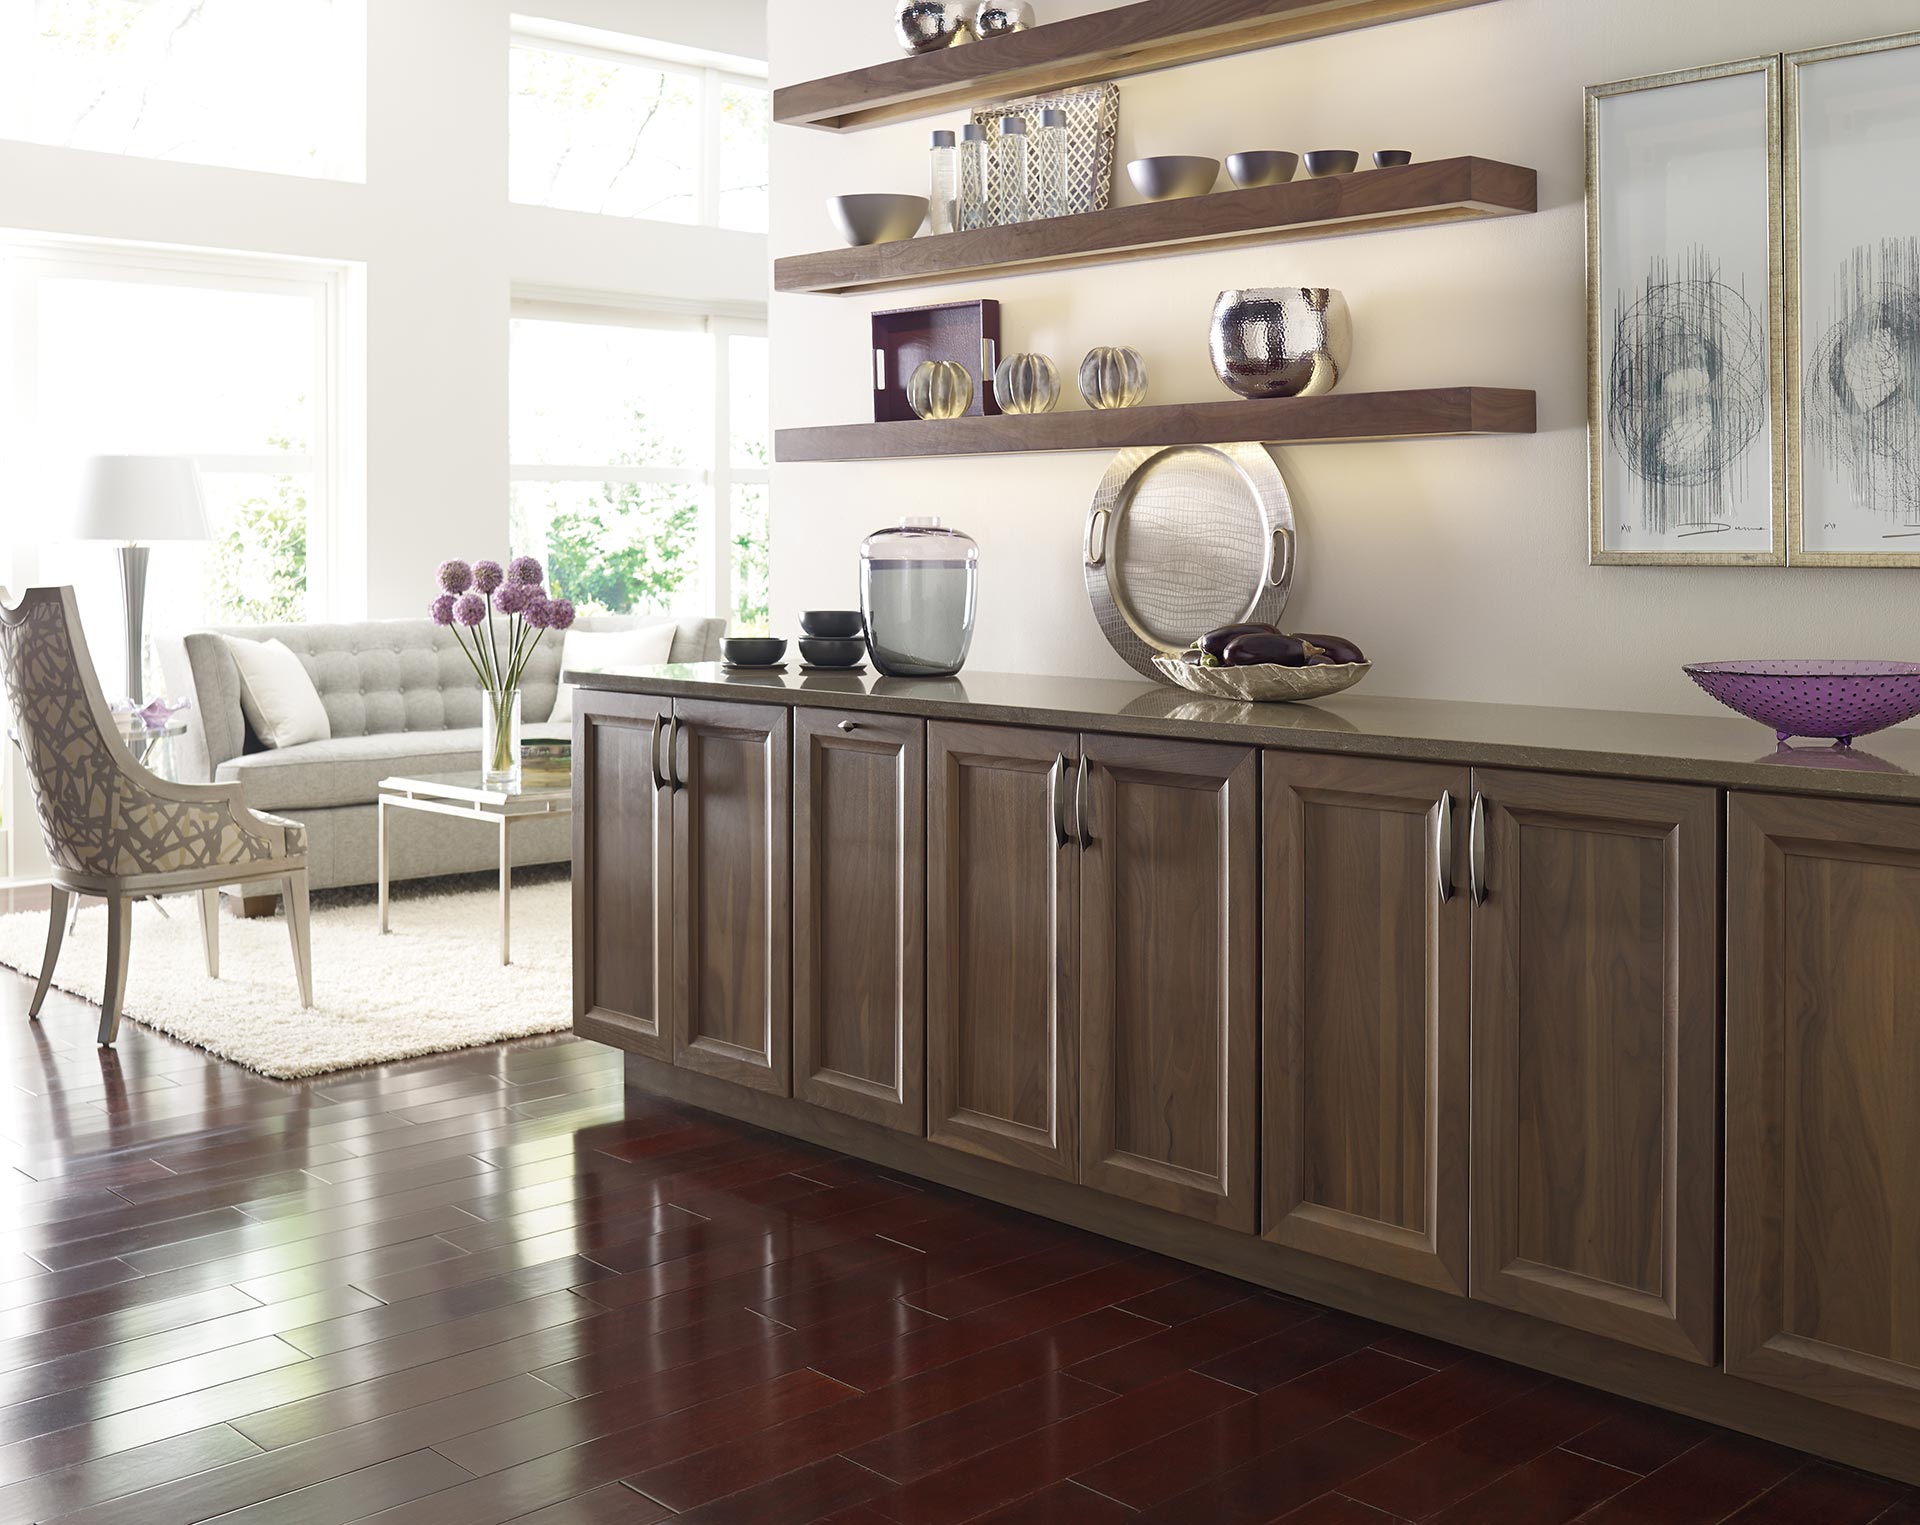 Traditional Woodgrain Family-Room Cabinets Omega Distinctive Kitchens